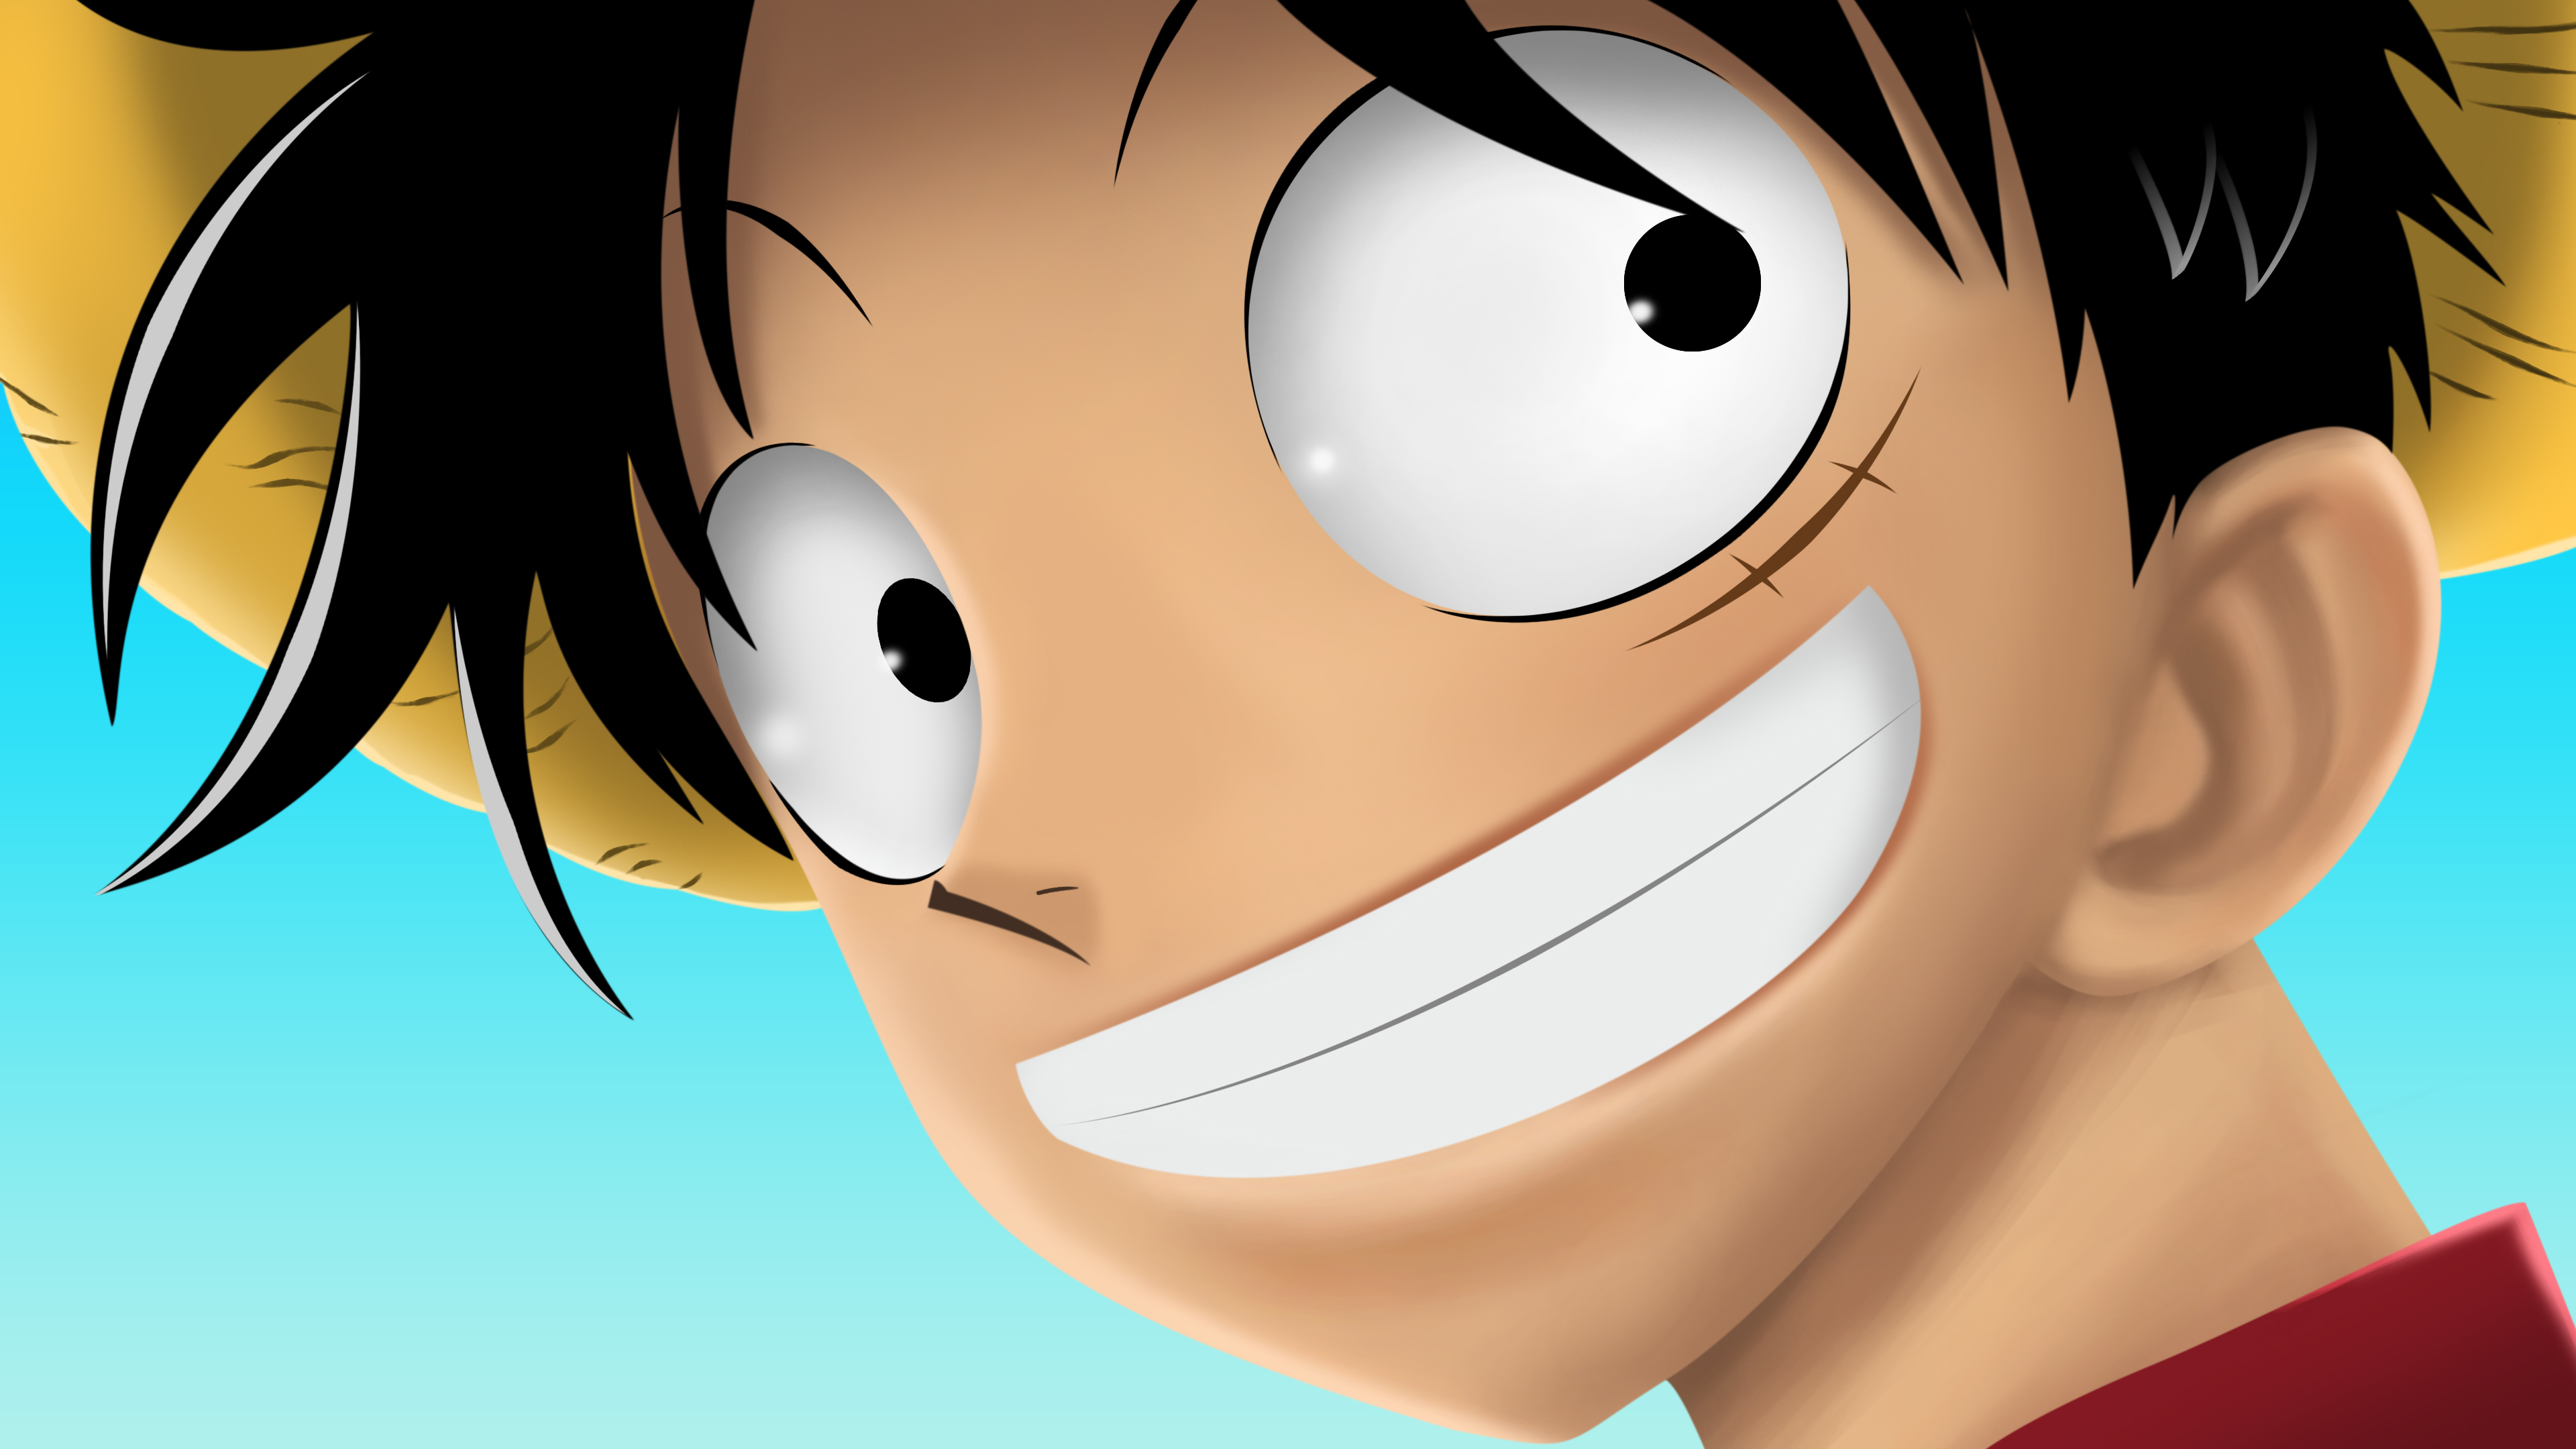 One Piece anime - Straw hat Monkey D Luffy